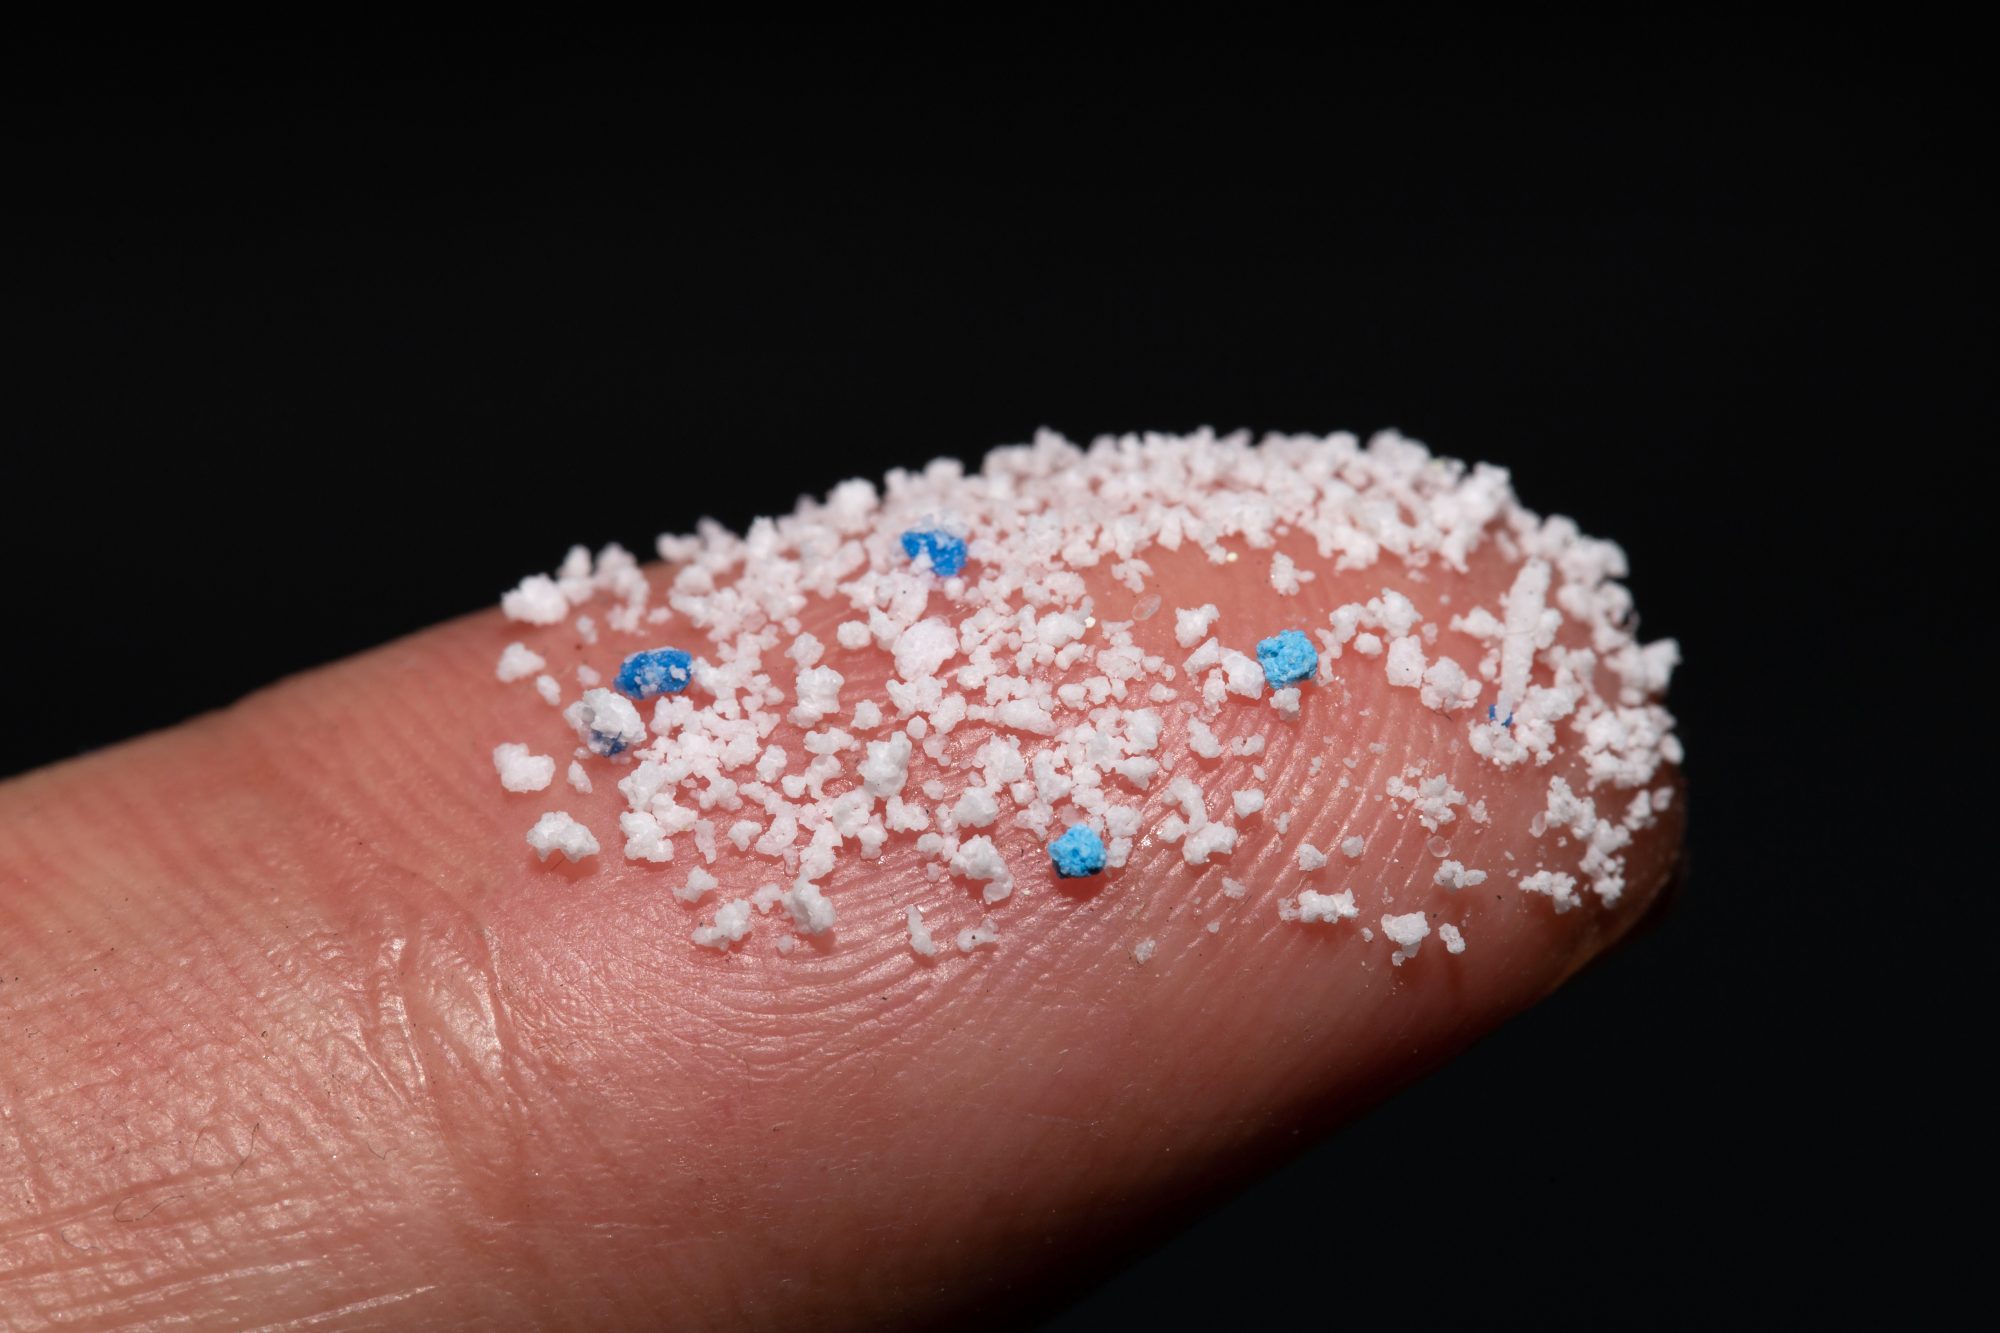 Small Plastic pellets on the finger. Micro plastics